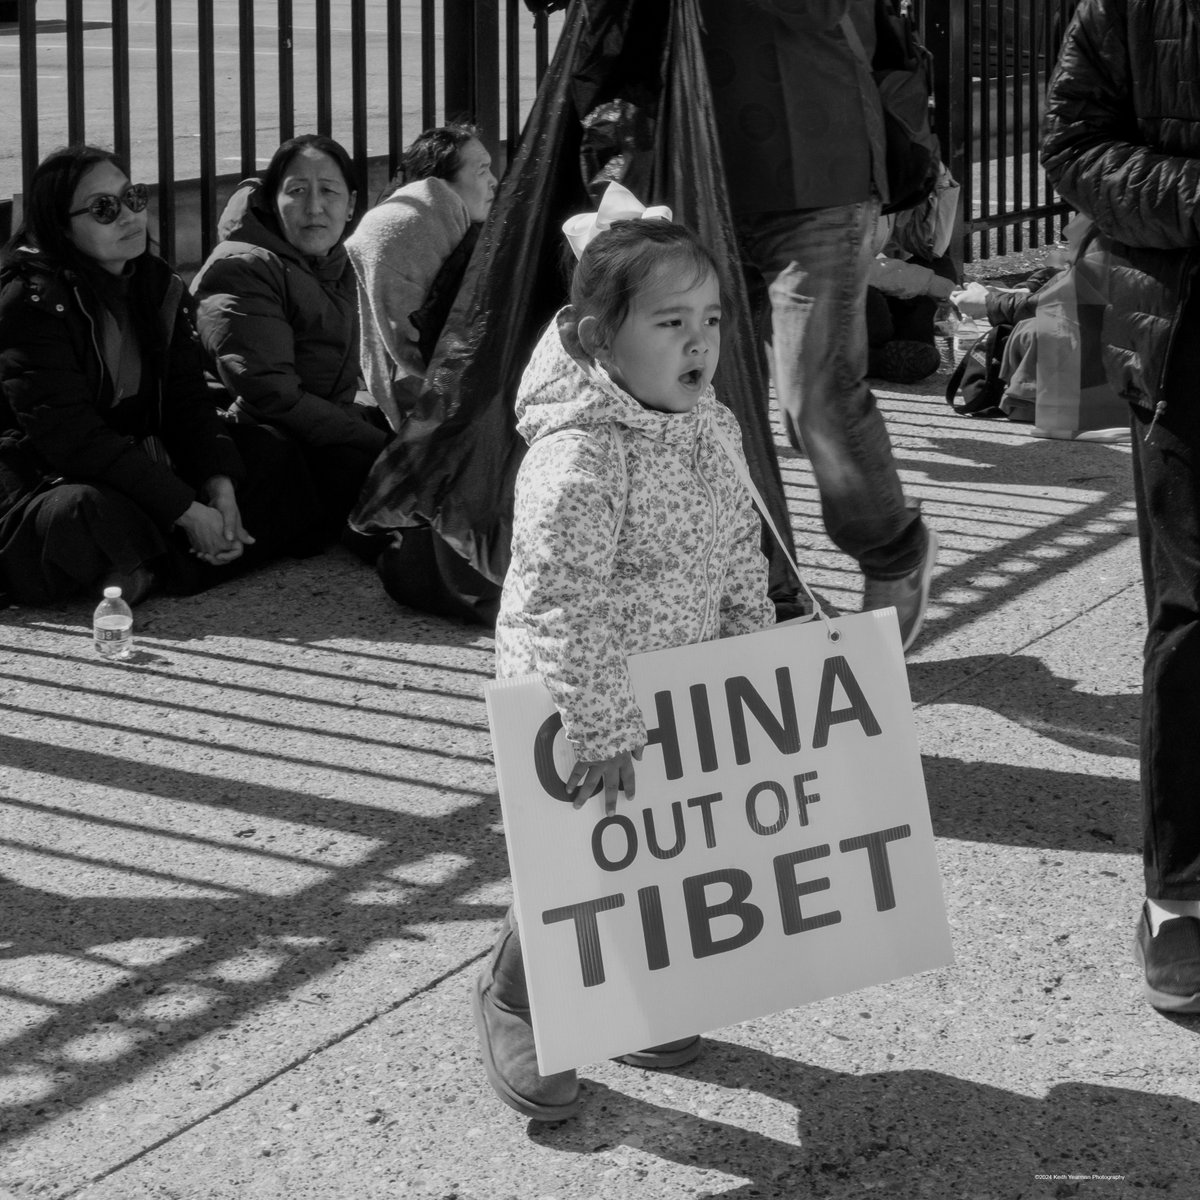 Tibetan Uprising Day (Chinese consulate)

#streetphotography #monochromephotography #chicagophotography #chicago #tibet #tibetan #blackandwhitephotography #tibetanuprisingday